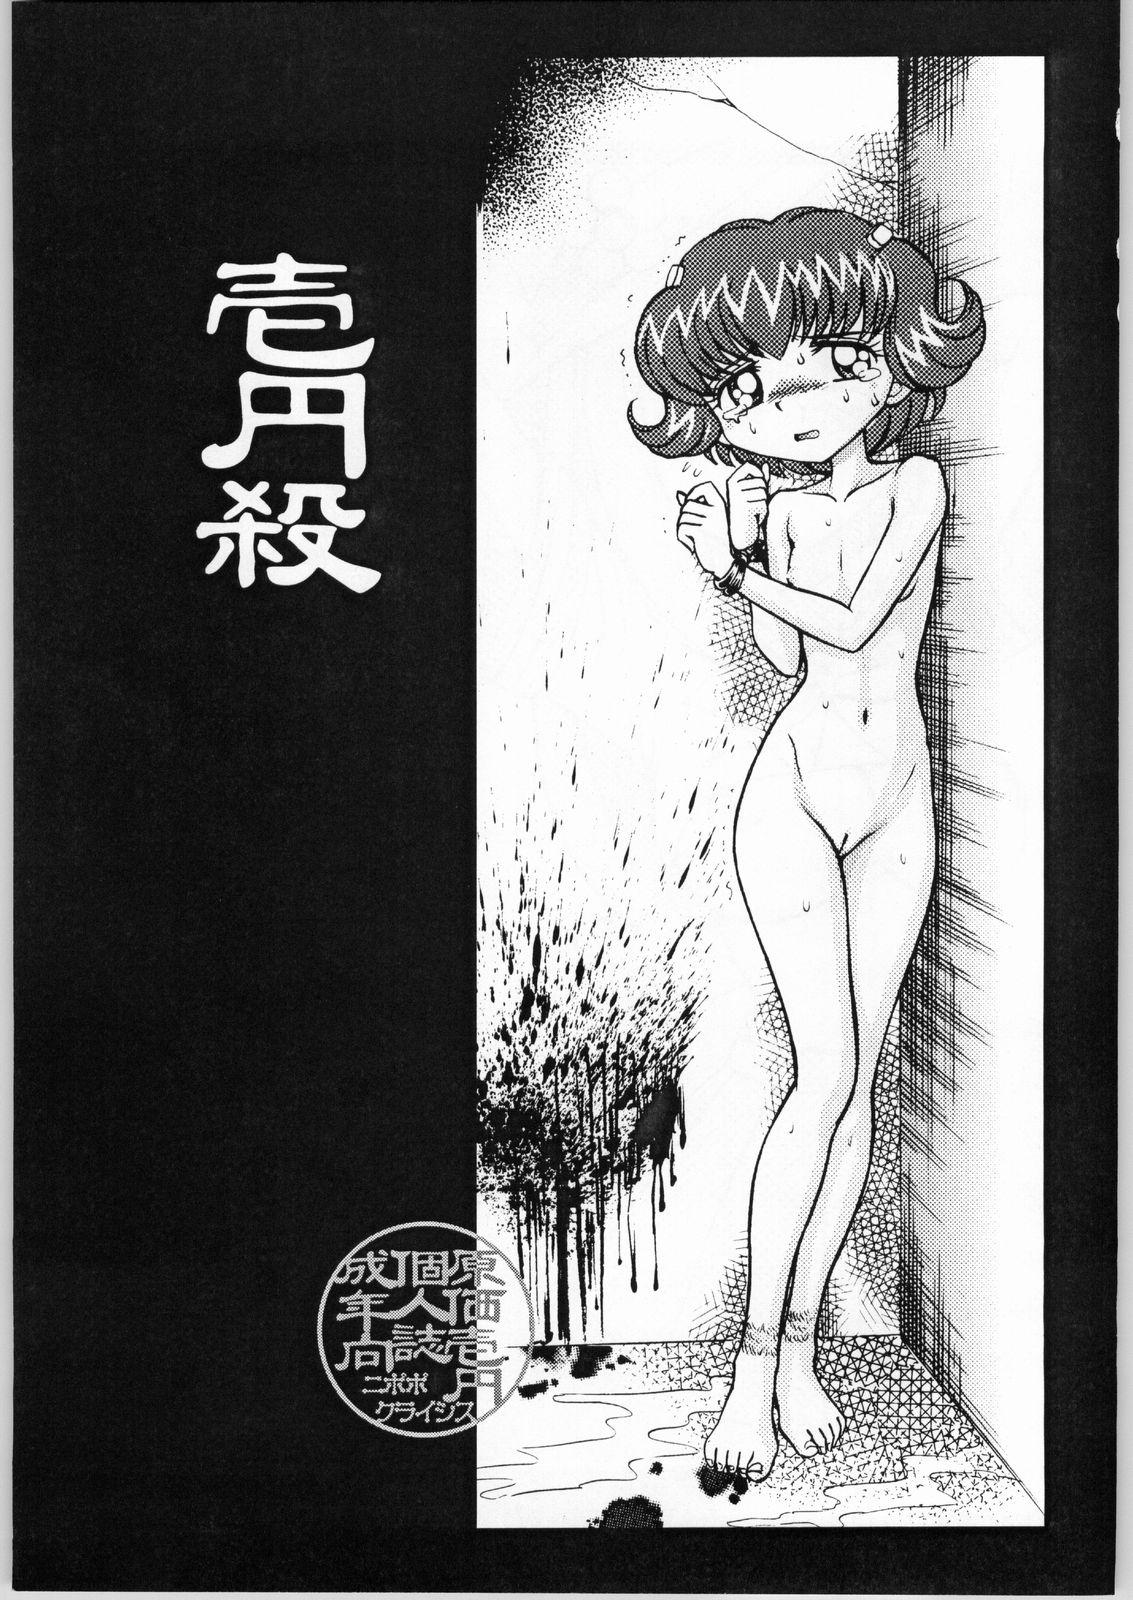 Couple Sex Ichien Satsu - Ojamajo doremi Tenchi muyo Martian successor nadesico Turn a gundam Hand maid may Medabots Hamtaro Flagra - Page 2